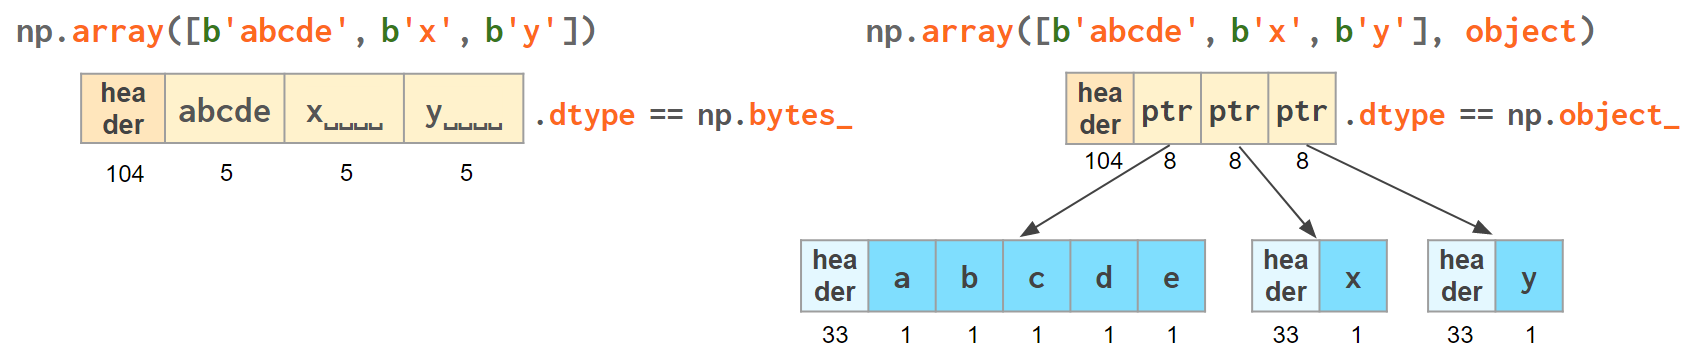 NumPy Bytes_ Type